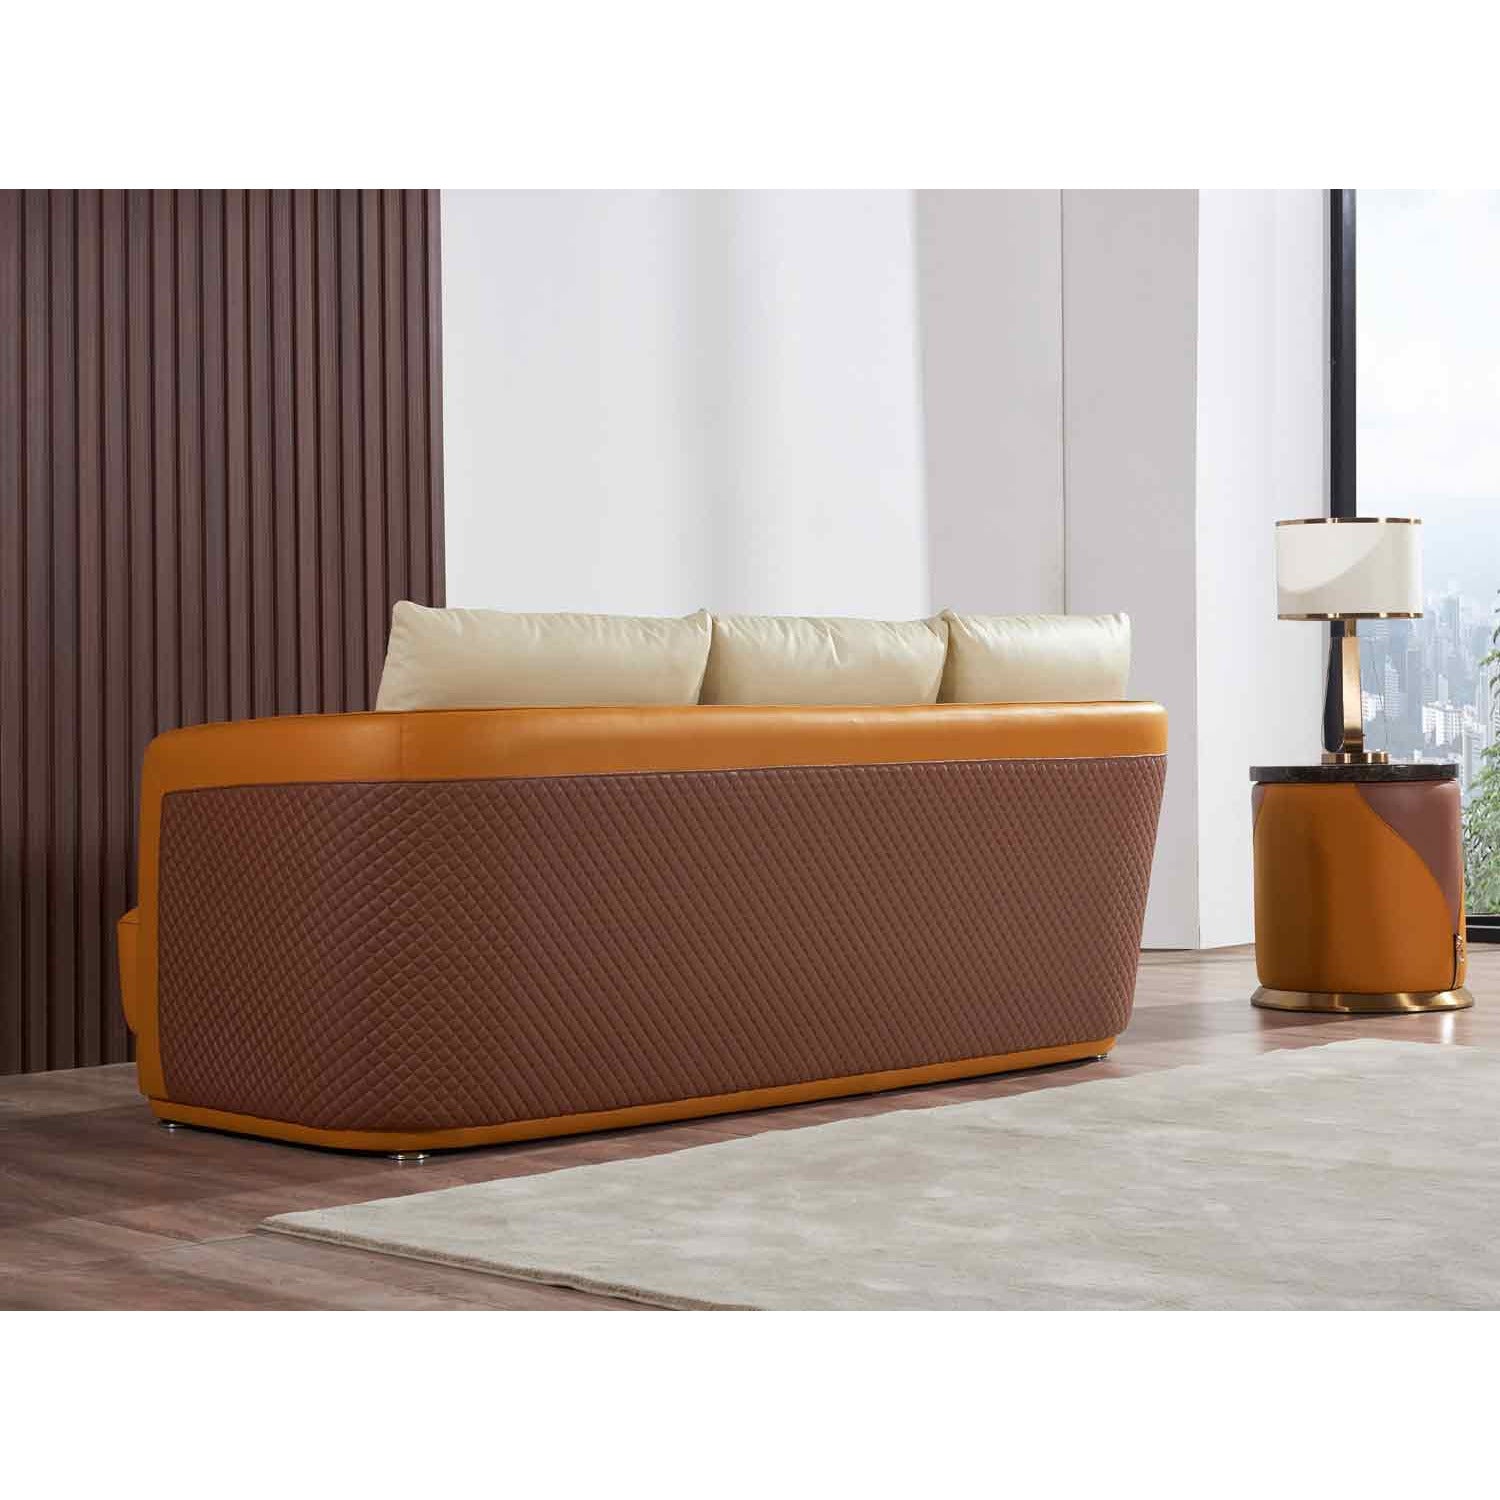 European Furniture - Glamour Sofa in Orange-Brown - 51619-S - New Star Living